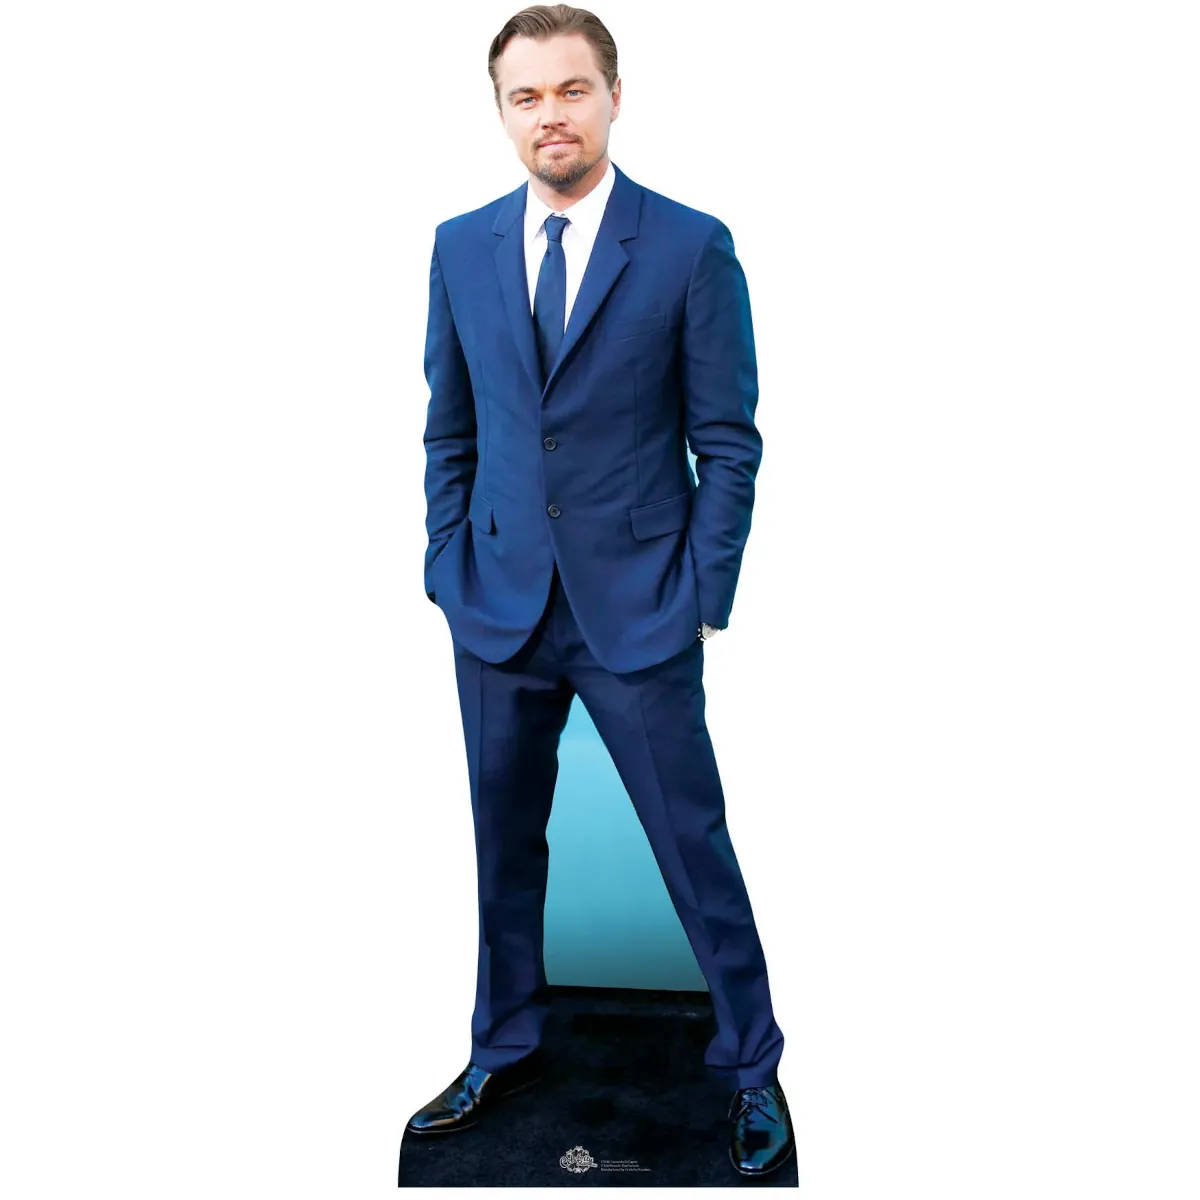 CS586 Leonardo DiCaprio 'Blue Suit' (American Actor) Lifesize Cardboard Cutout Standee Front